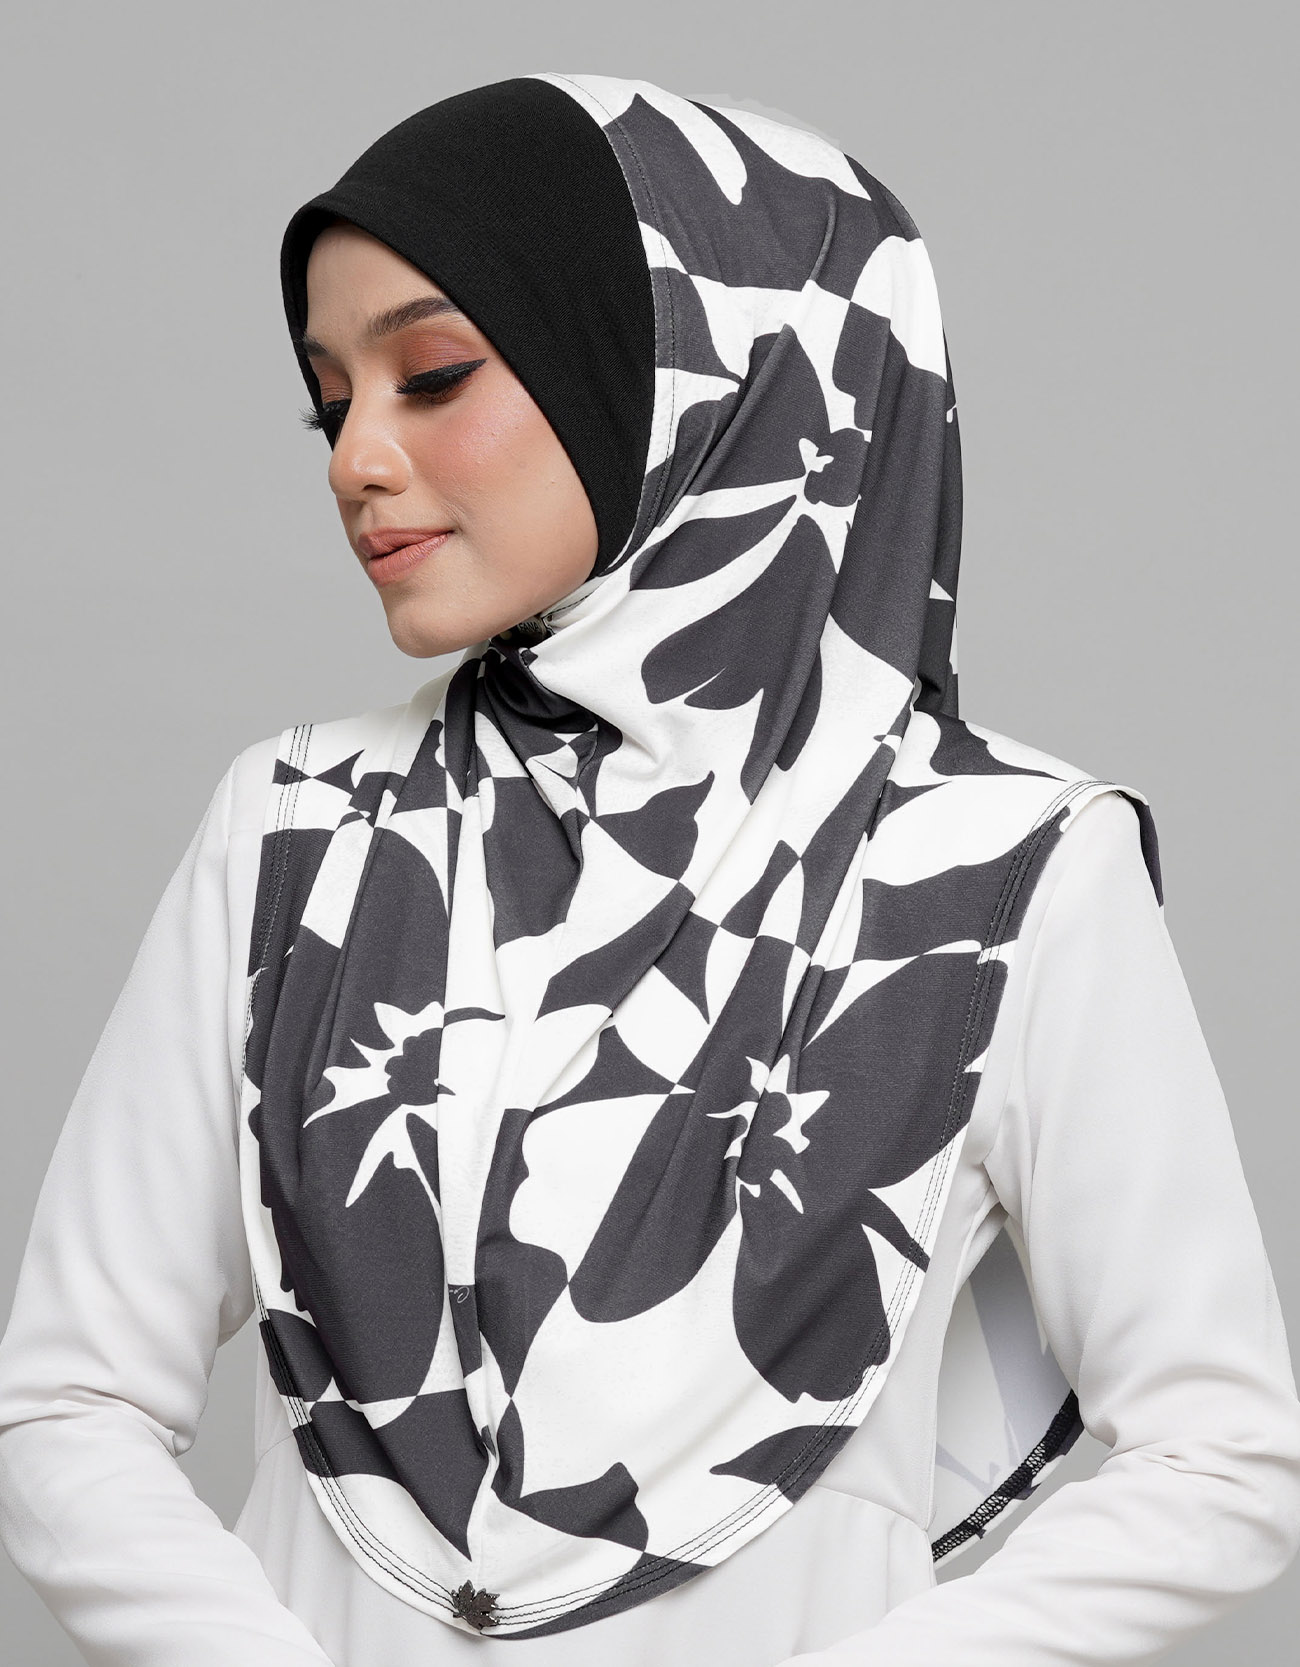 Express Hijab Damia Signature 12 - Black Edition&w=300&zc=1